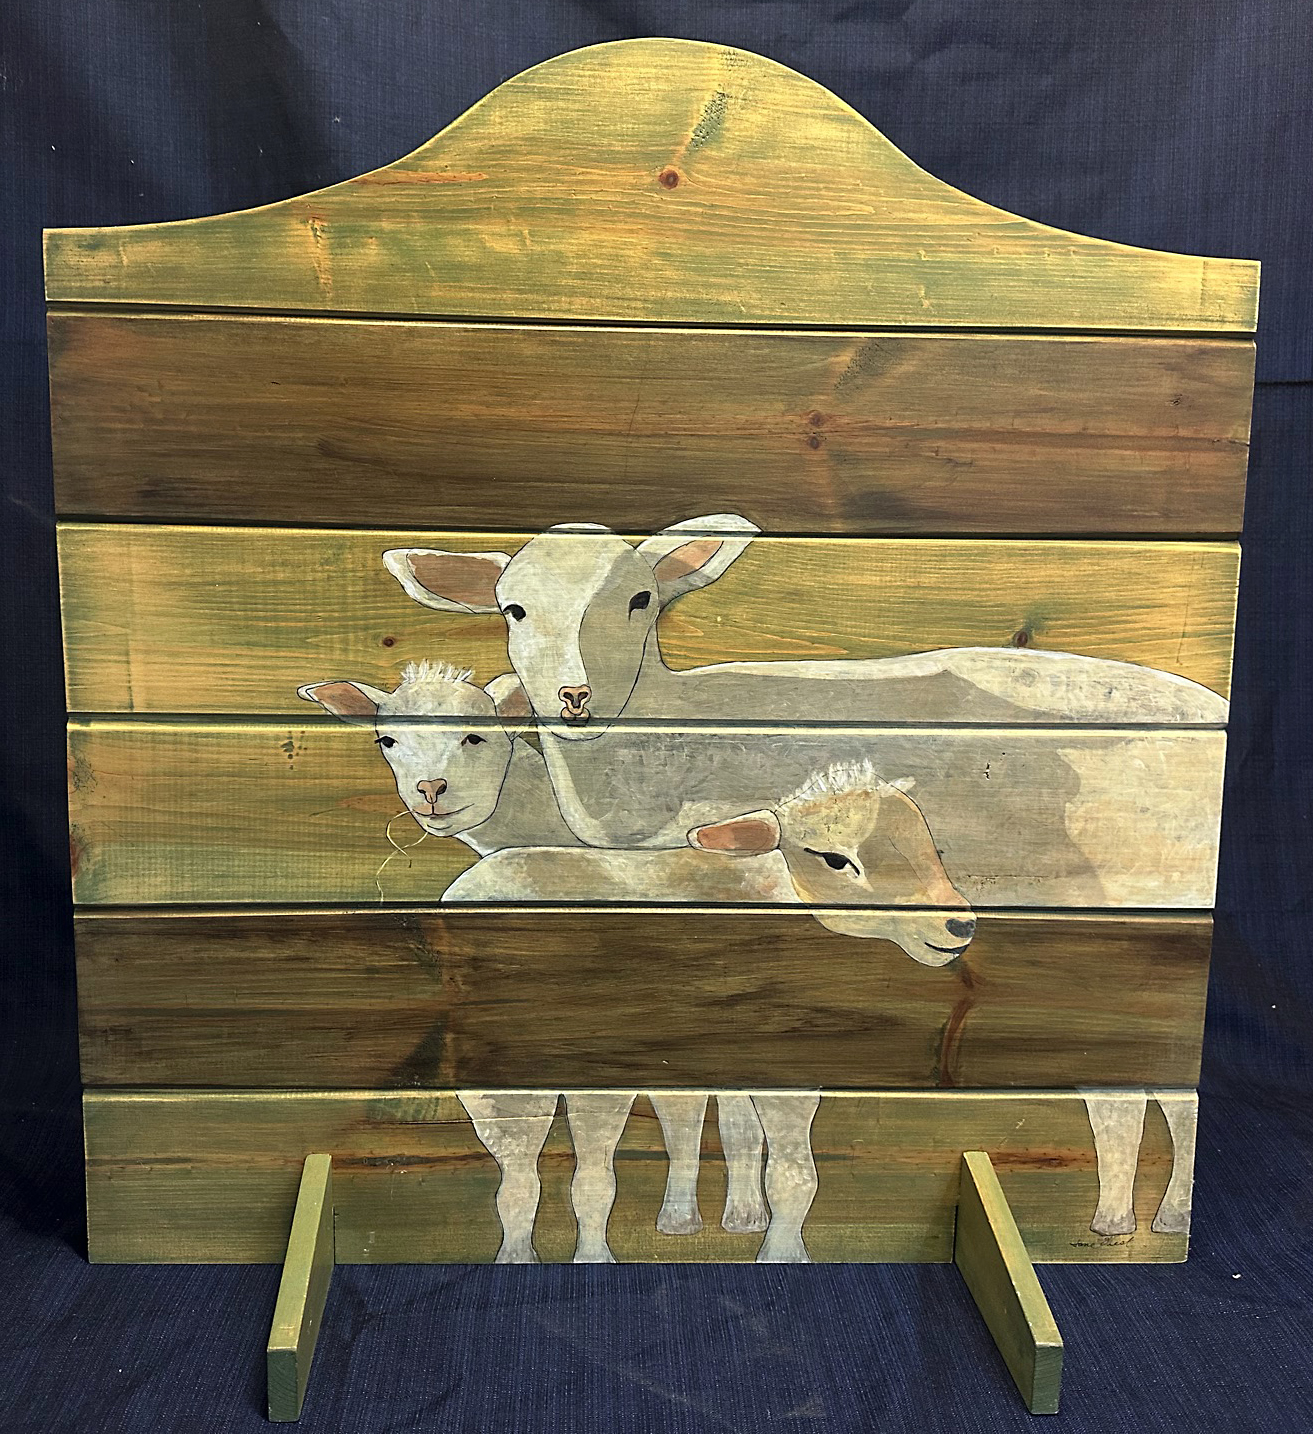 #2. Fireboard. Jane West. Acrylic on Wood (32" x 34")  $50 Suggested Minimum Bid